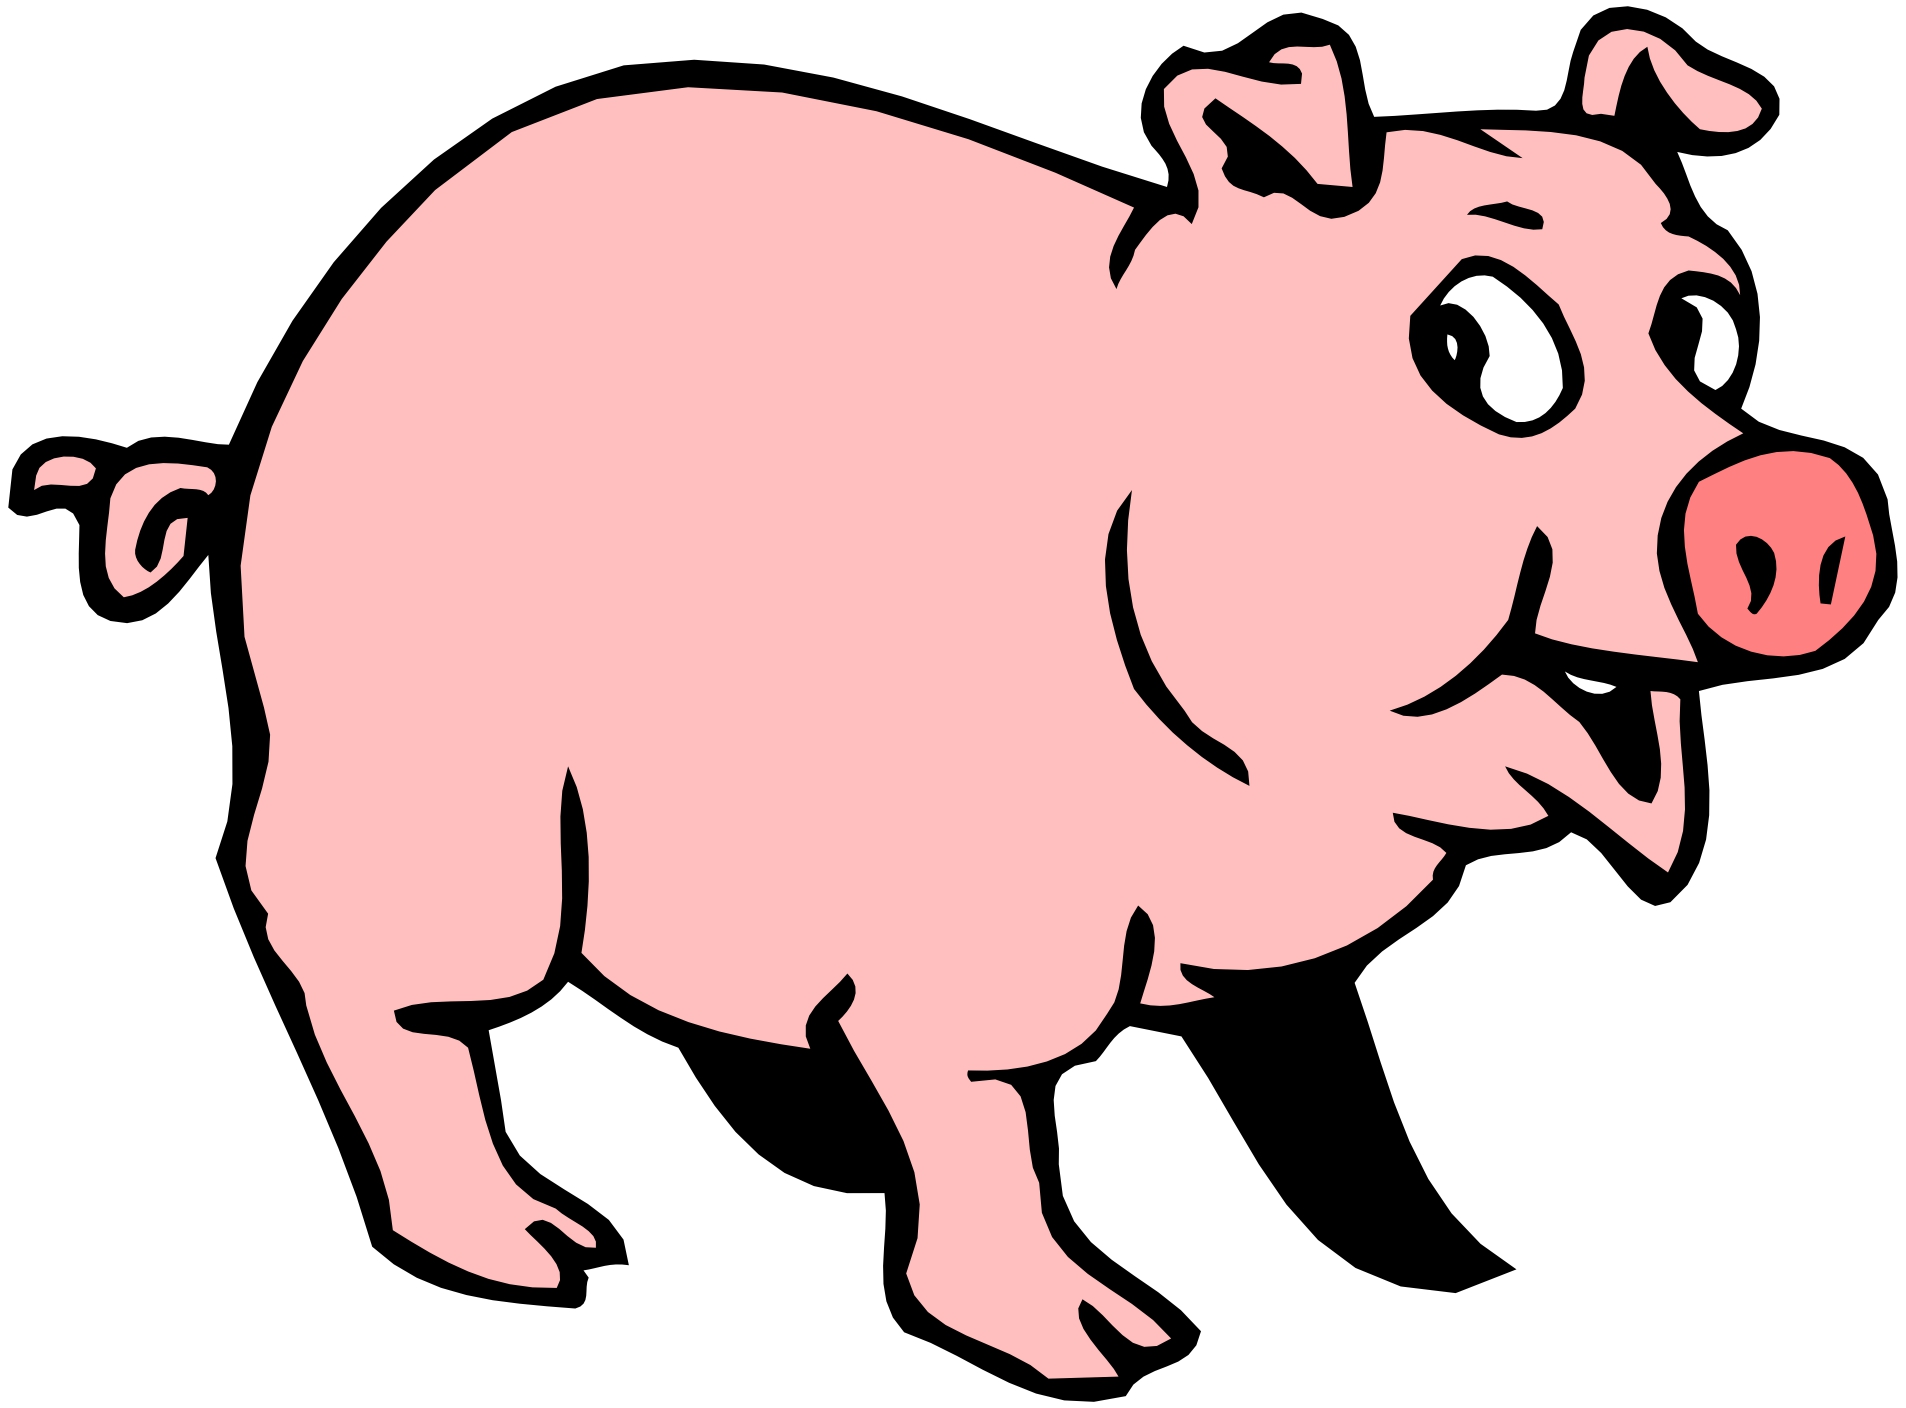 Pig Cartoon Image - ClipArt Best